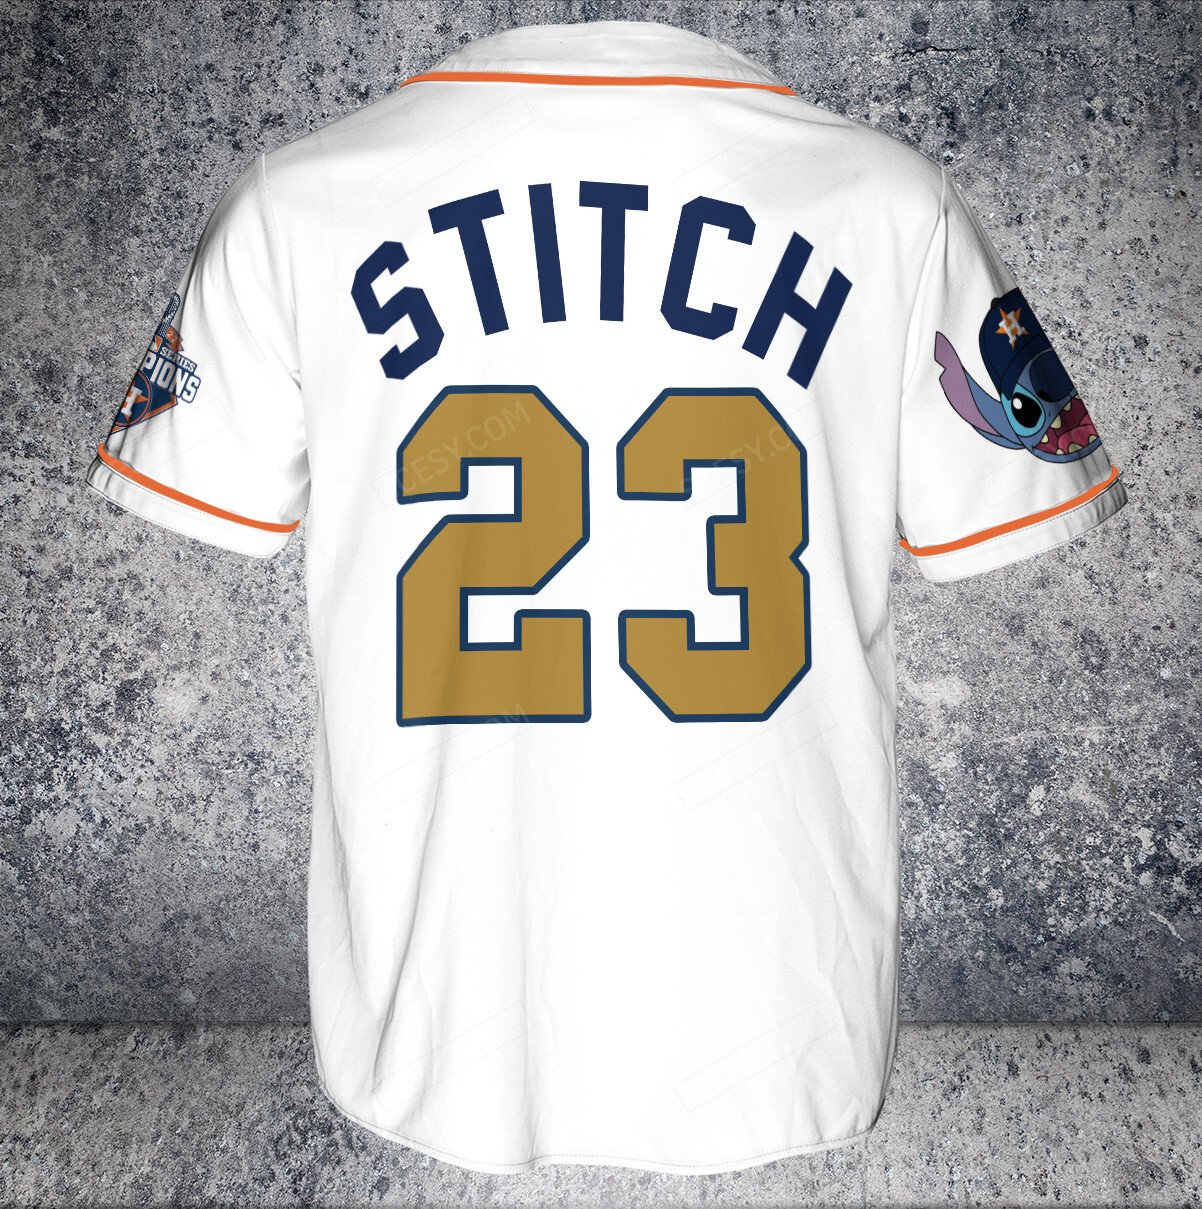 Houston Astros Gray Lilo & Stitch Baseball Jersey - Officially